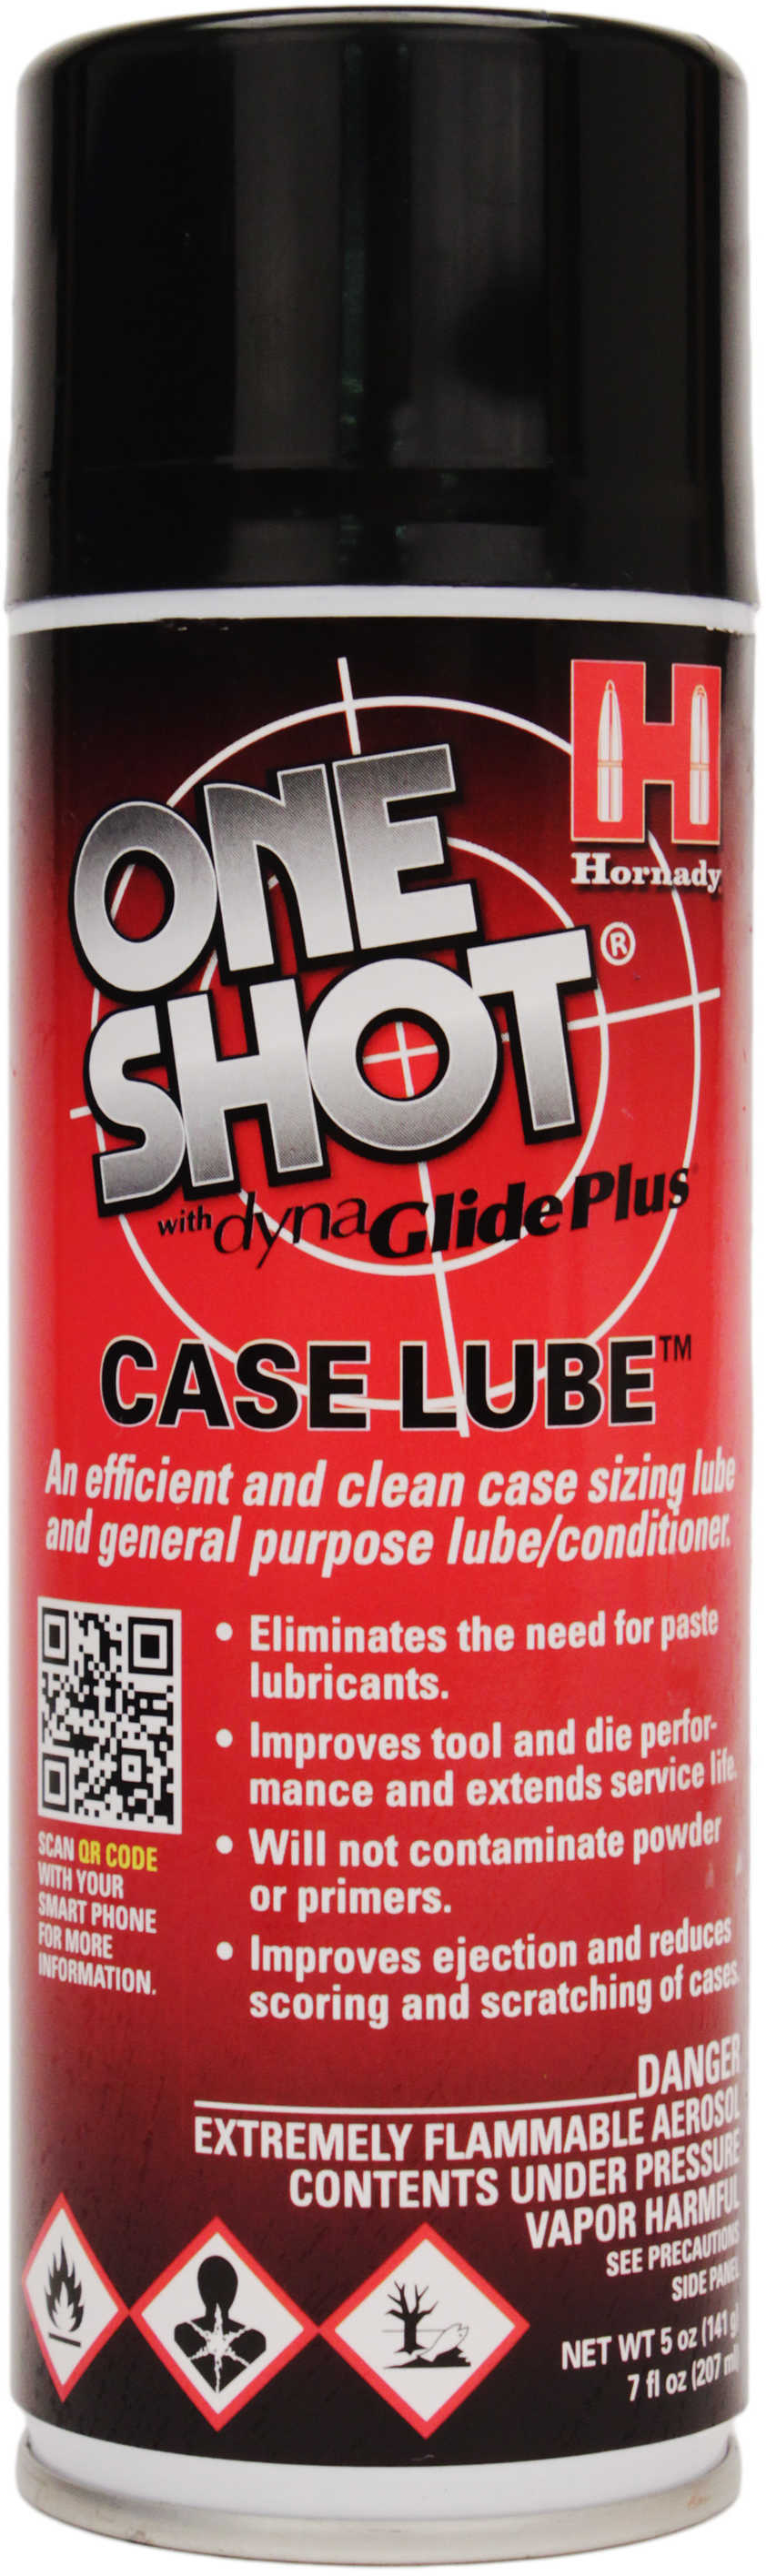 Hornady One Shot Spray Case Lube